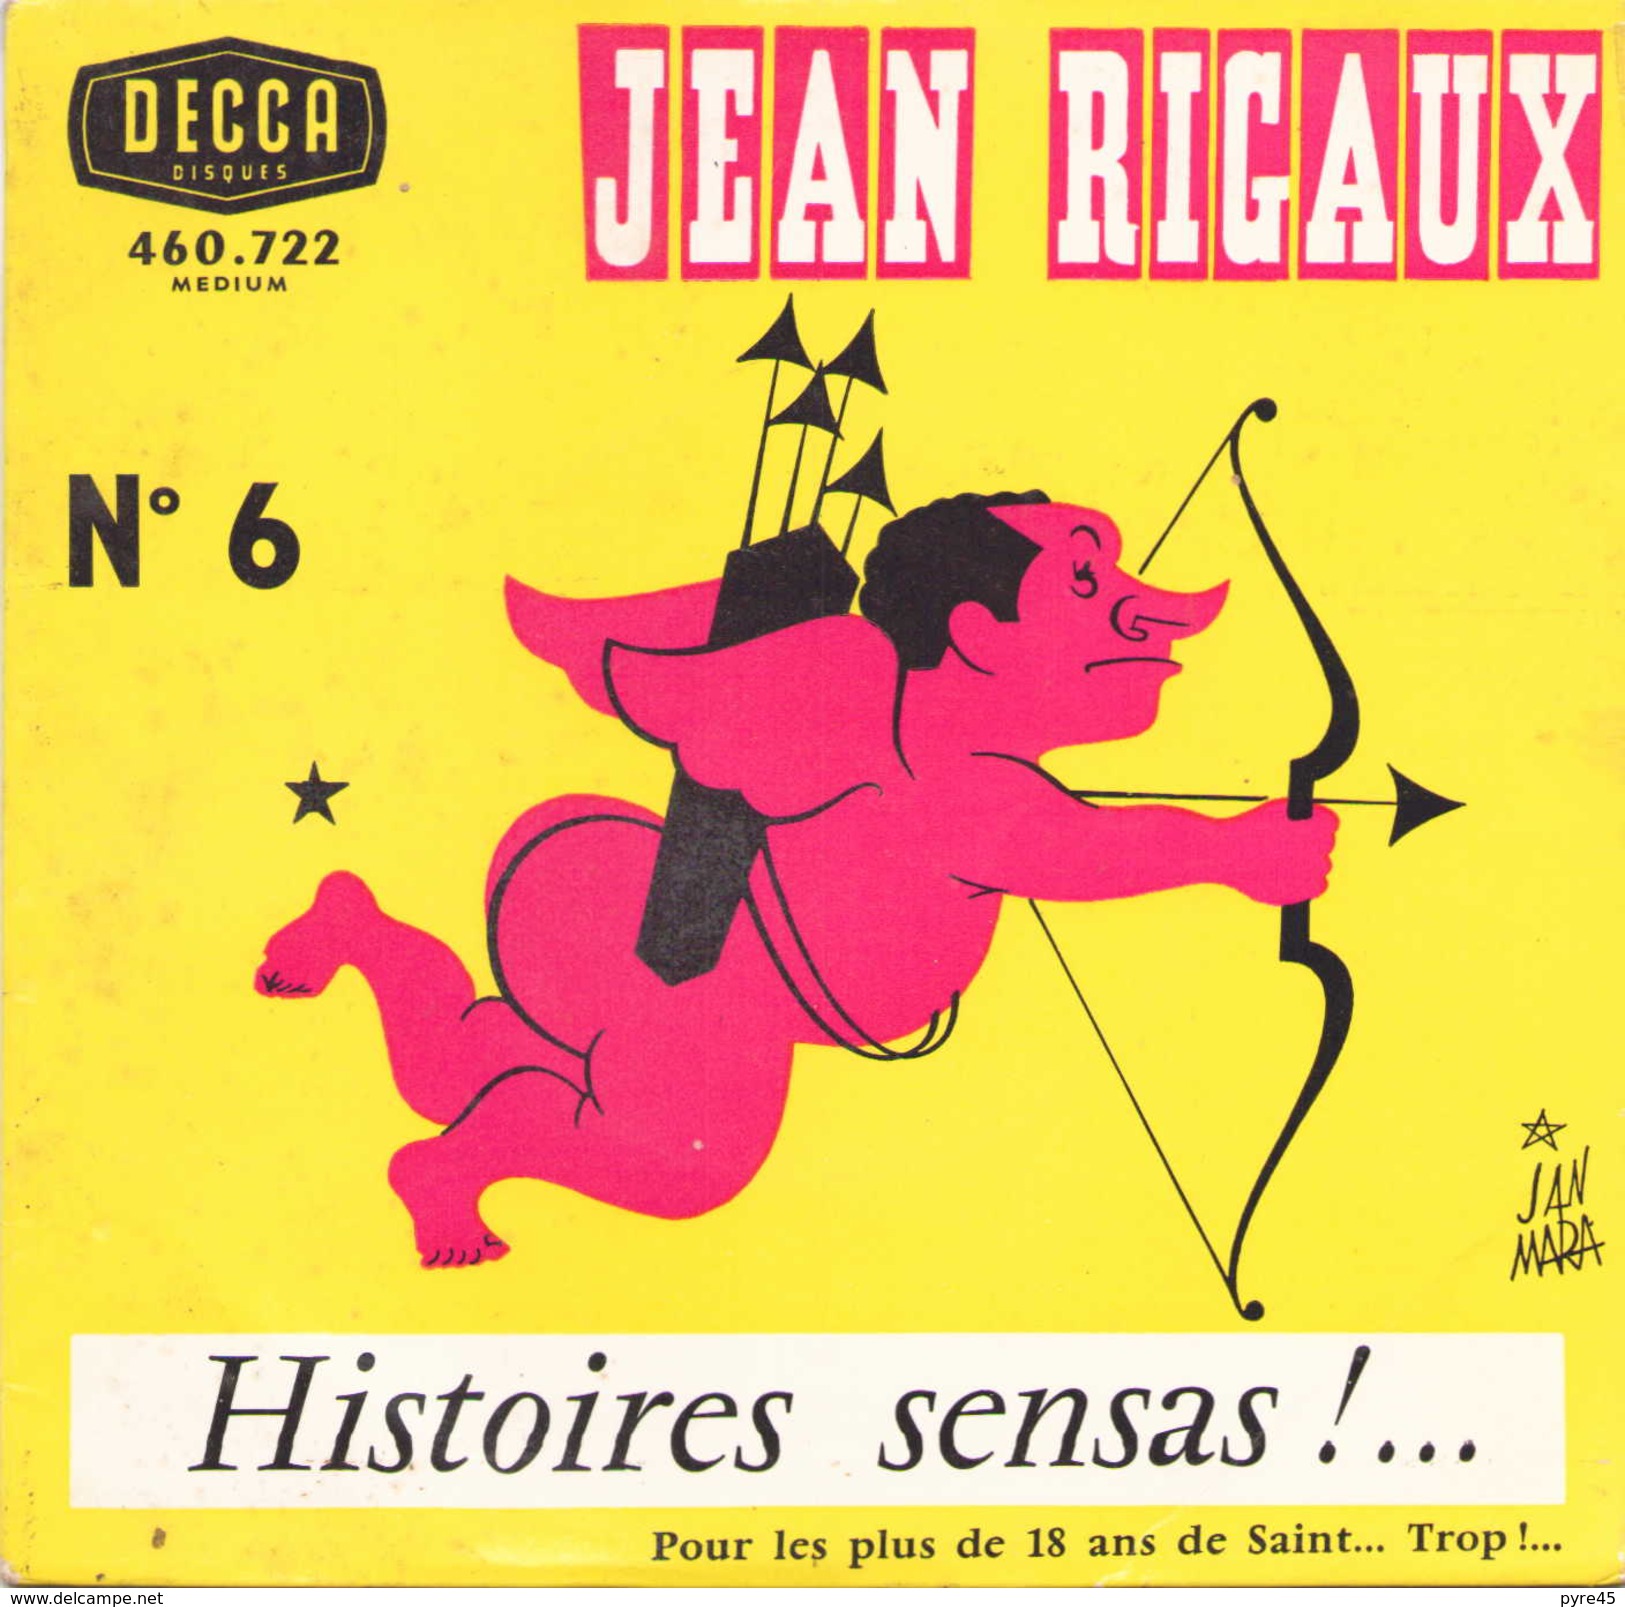 45 TOURS JEAN RIGAUX DECCA 460722 HISTOIRES SENSAS - Humor, Cabaret